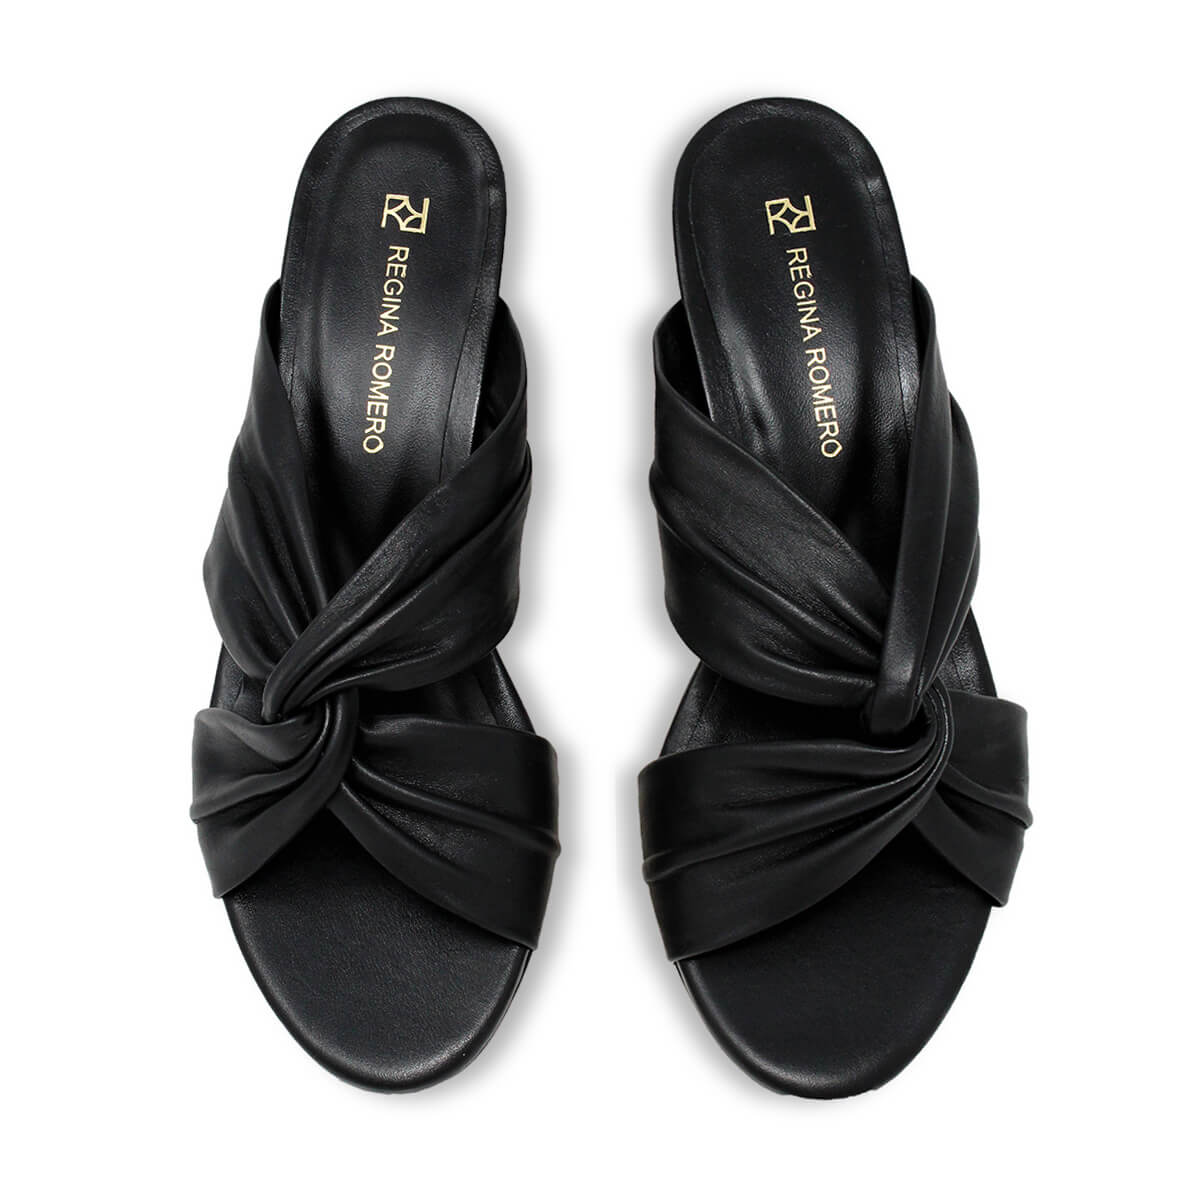 LINDA 55 - Black Regina Romero Low Heel Sandal Shoe for Women in Leather